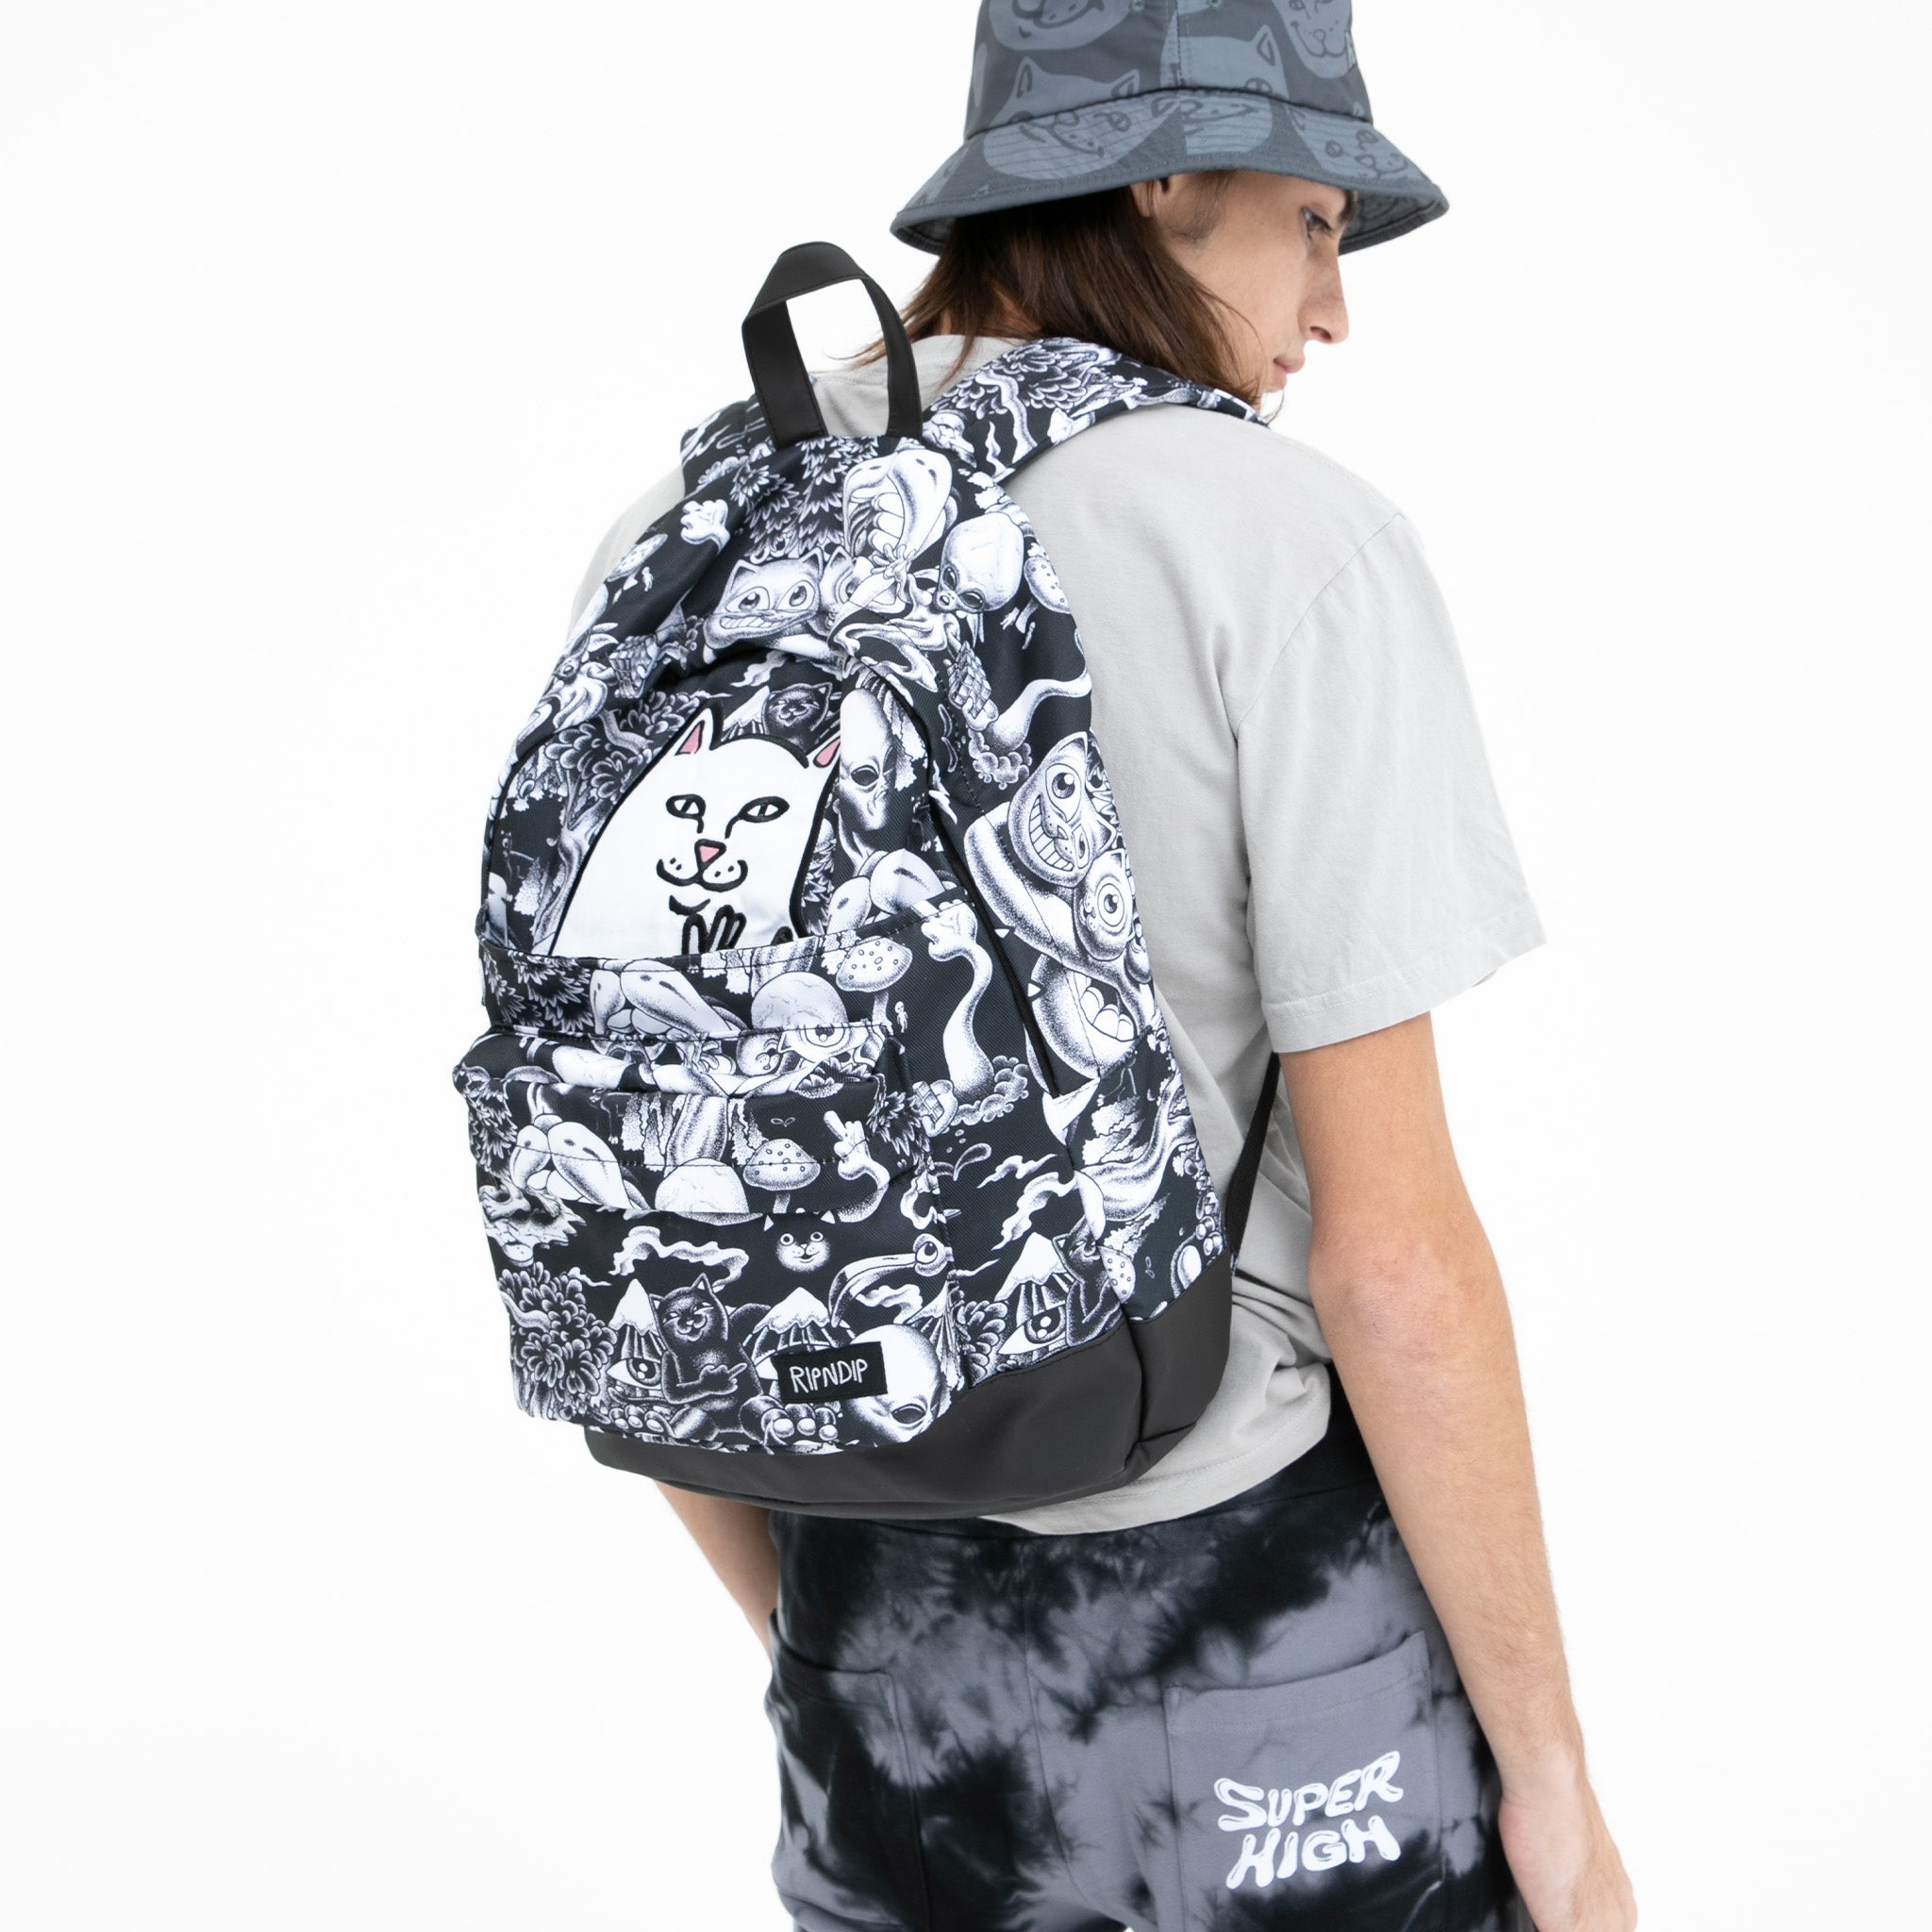 Dark Twisted Fantasy Backpack (Black/White)